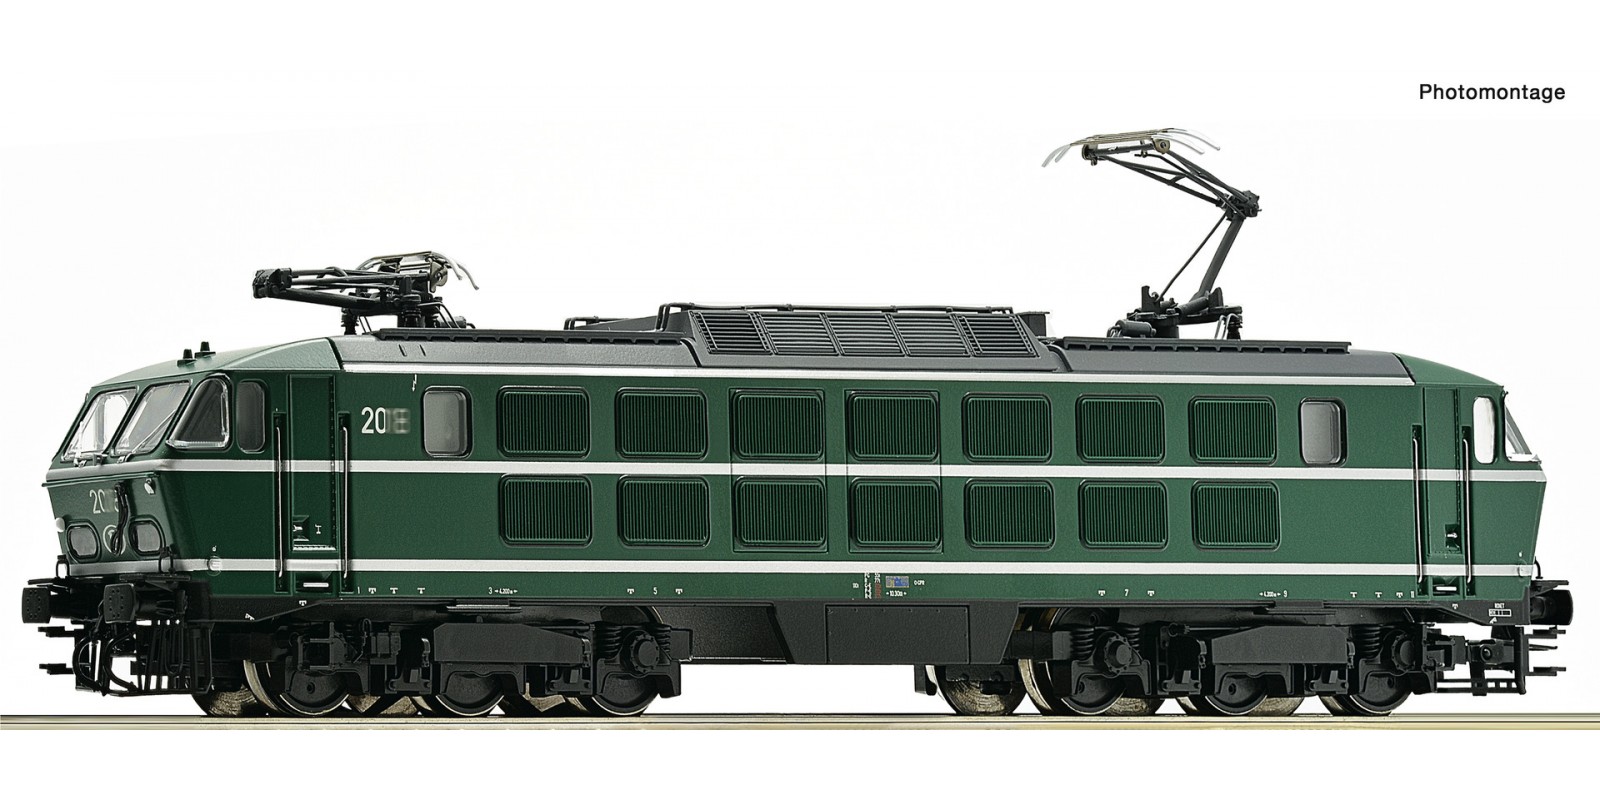 RO7500004 Electric locomotive Reeks 20, SNCB